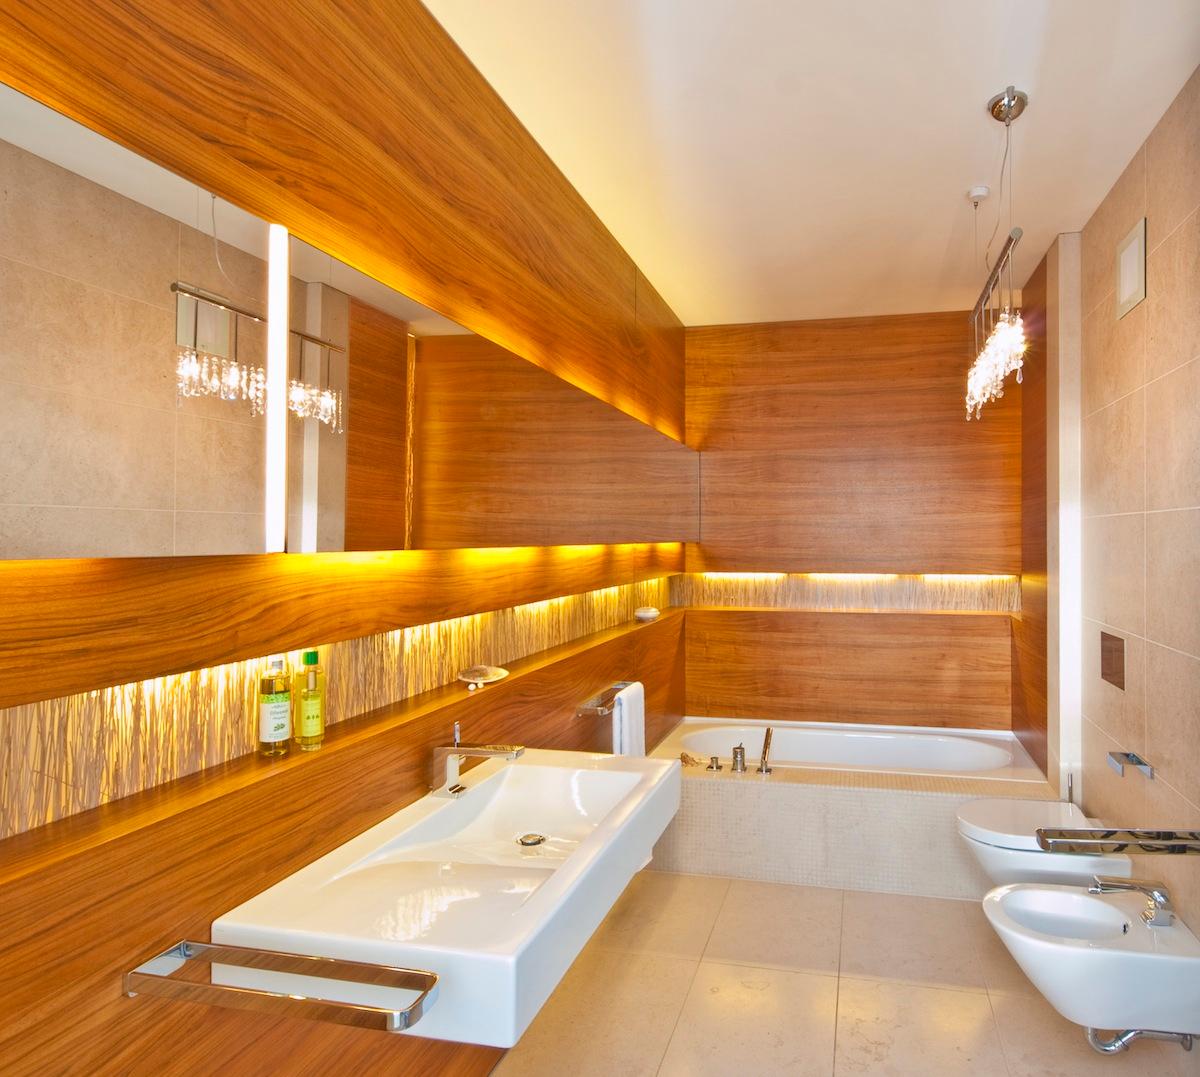 Designbad #badezimmer #waschbecken #loft #indirektebeleuchtung ©www.peters-fotodesign.com